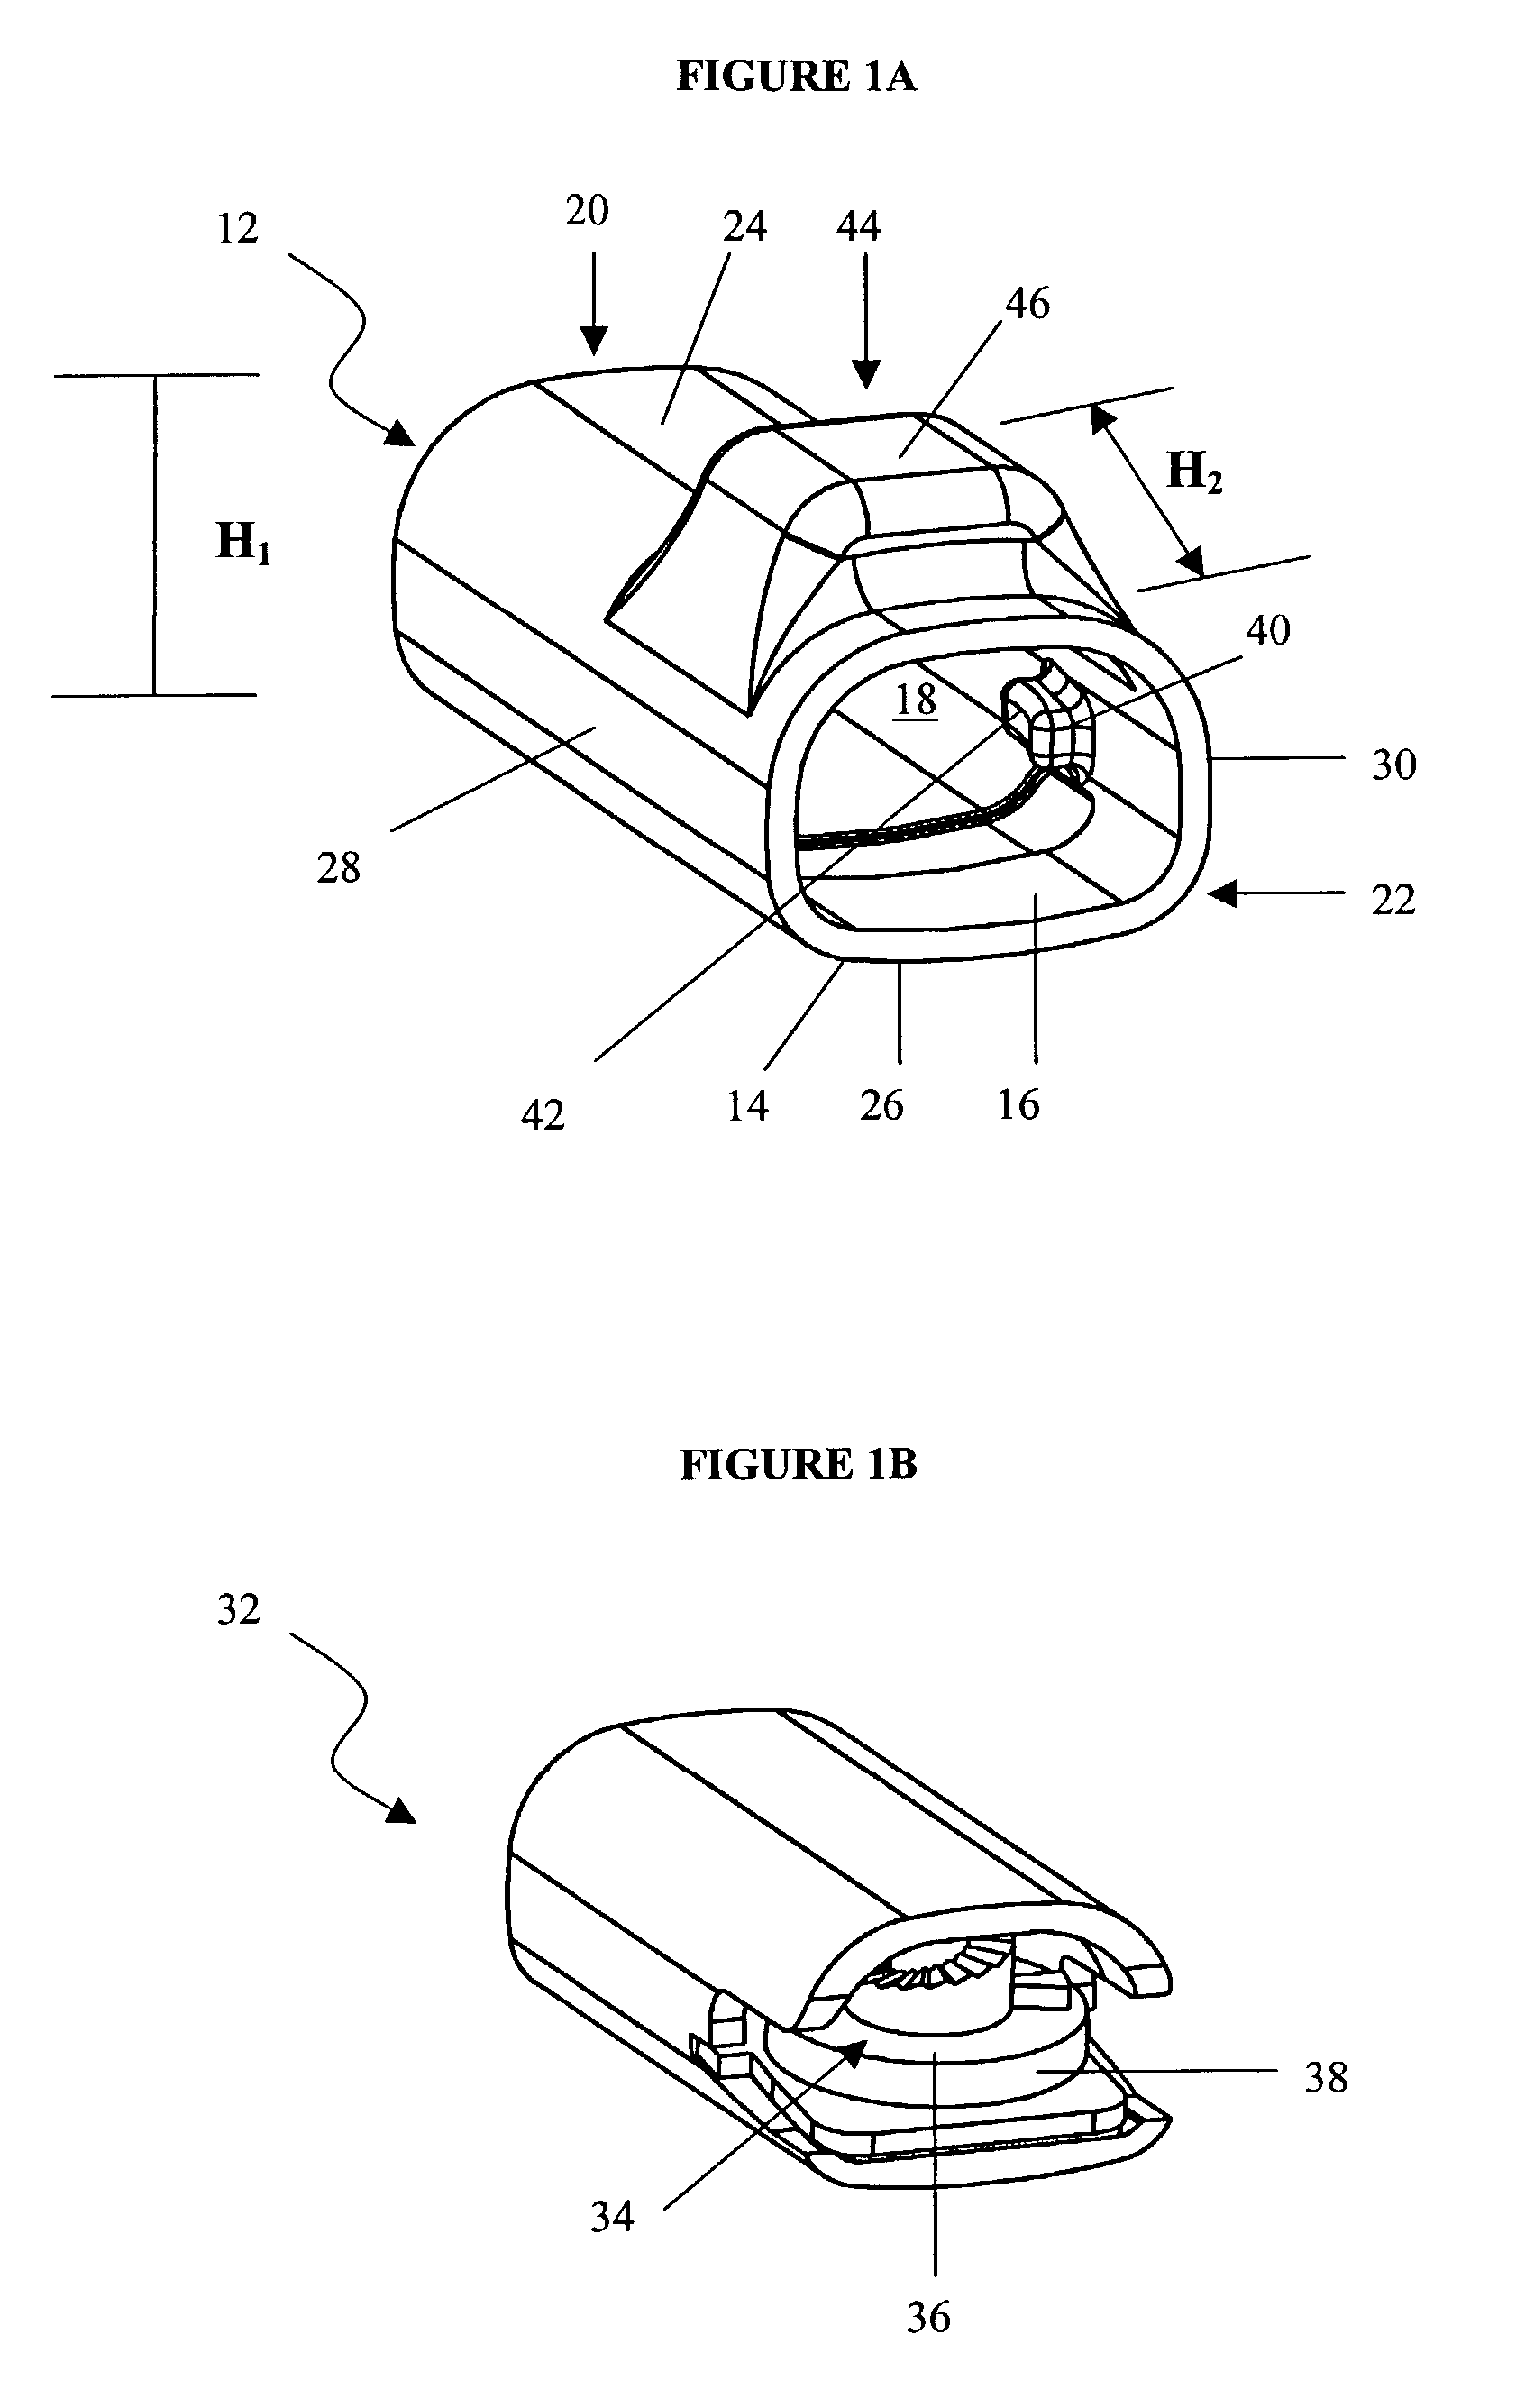 Shunt valve locking mechanism